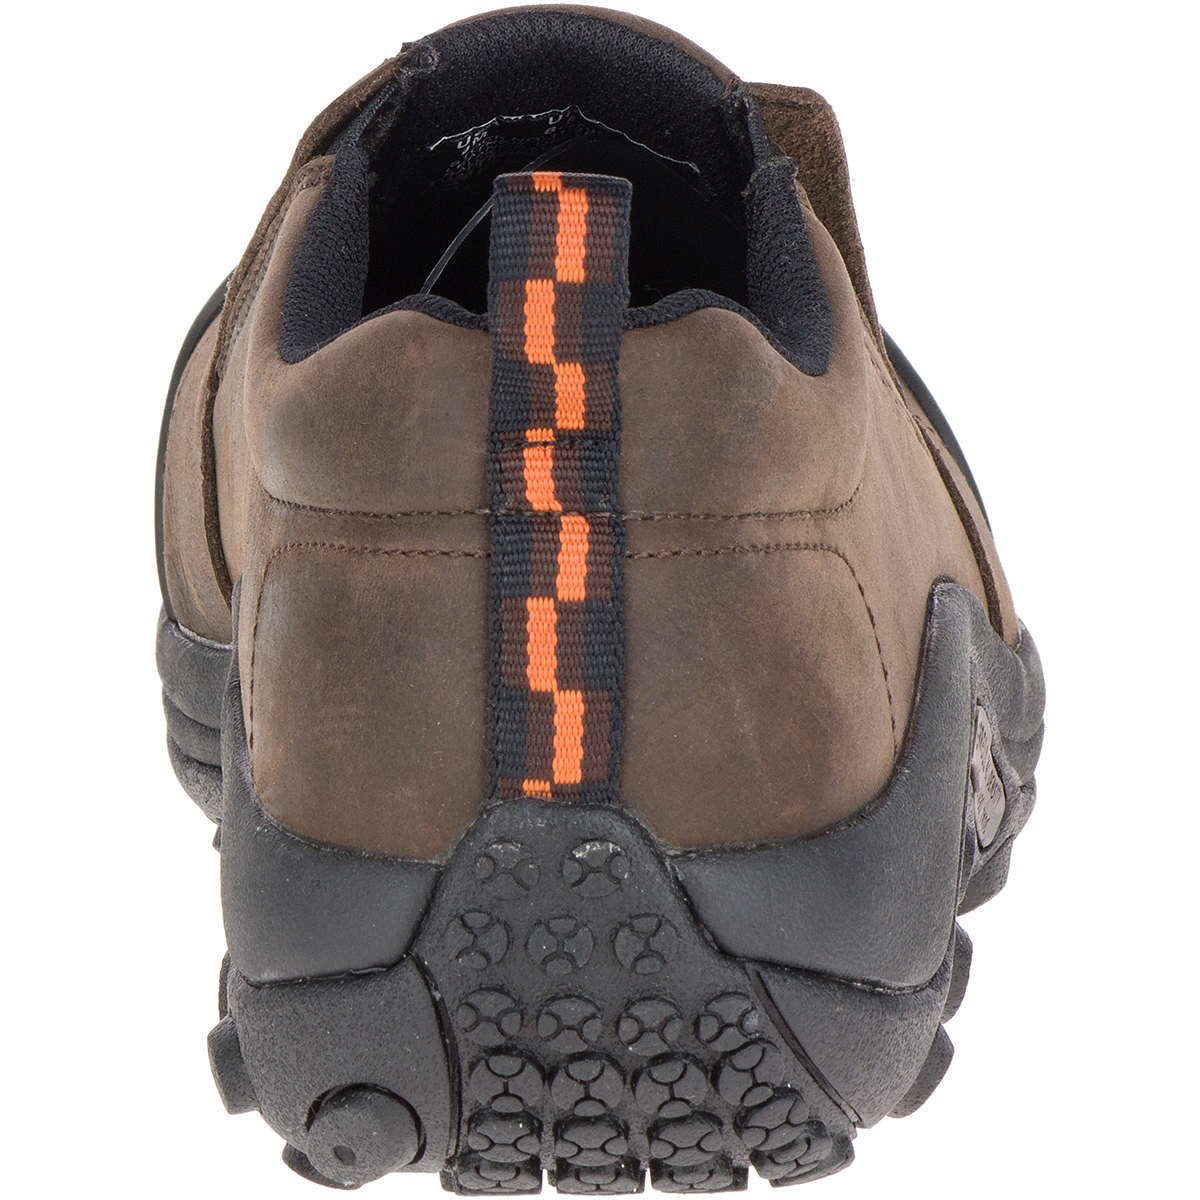 men's jungle moc comp toe work shoe